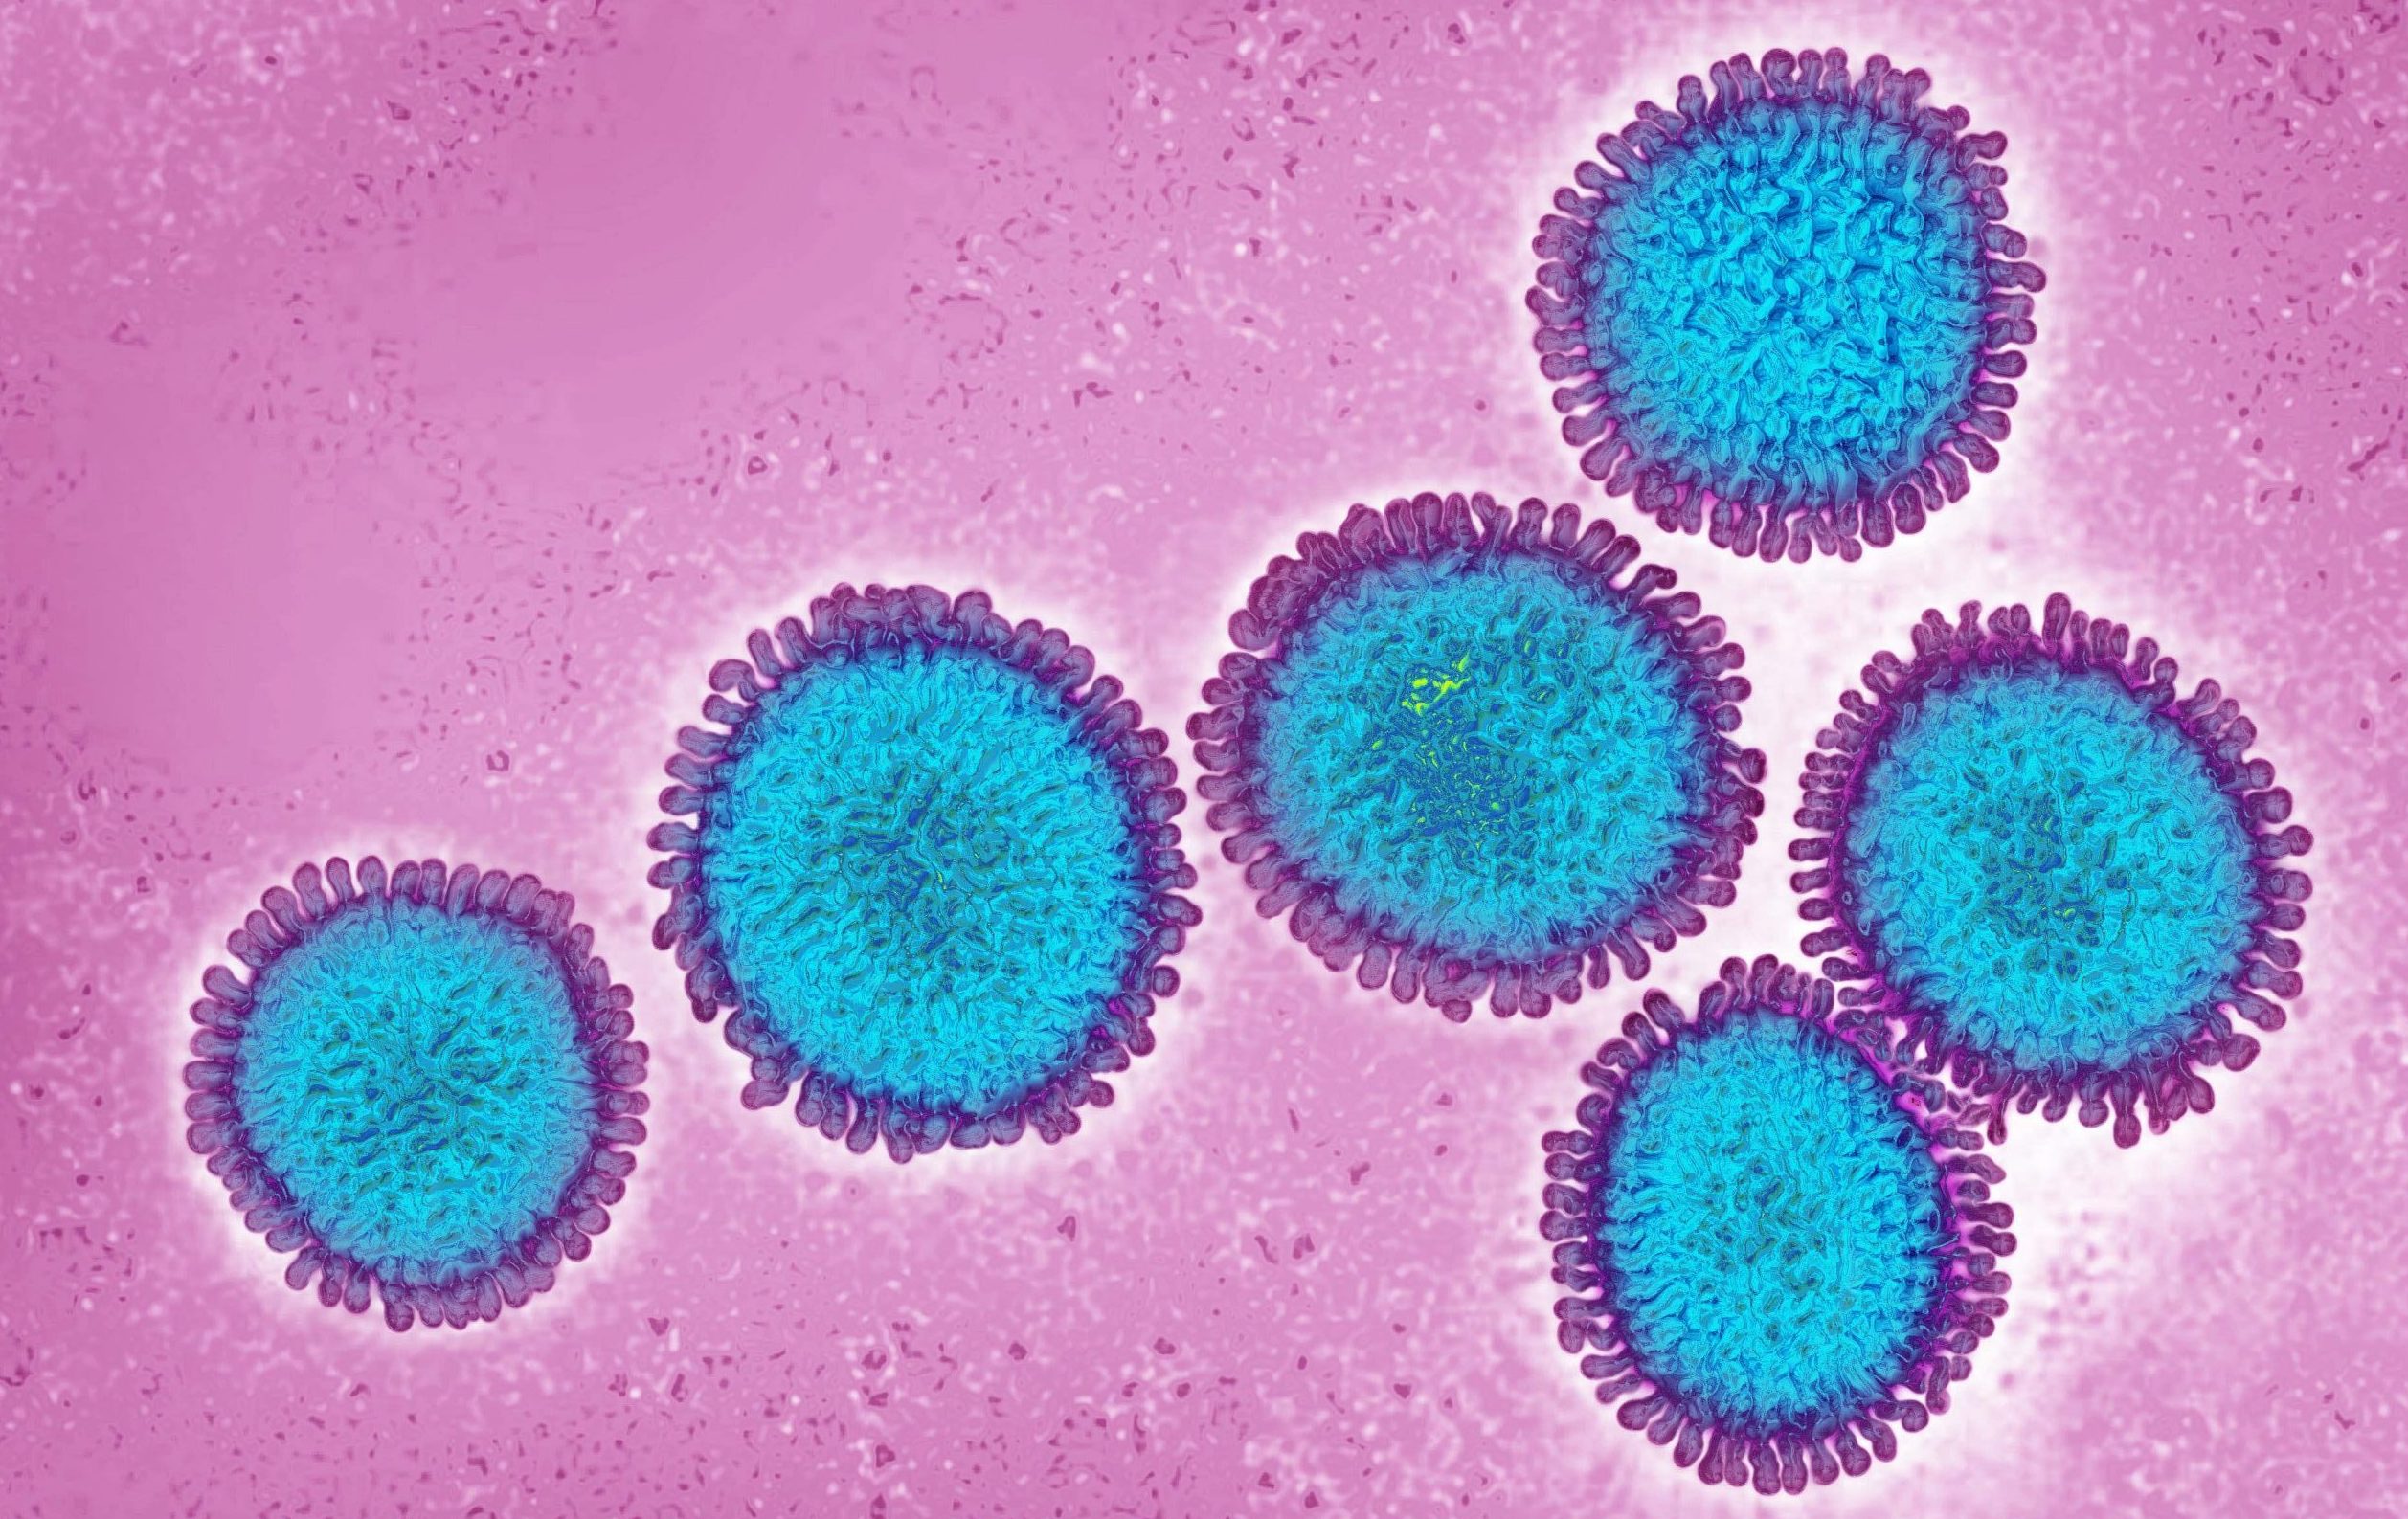 Coloured transmission electron micrograph (TEM) of Influenza virus